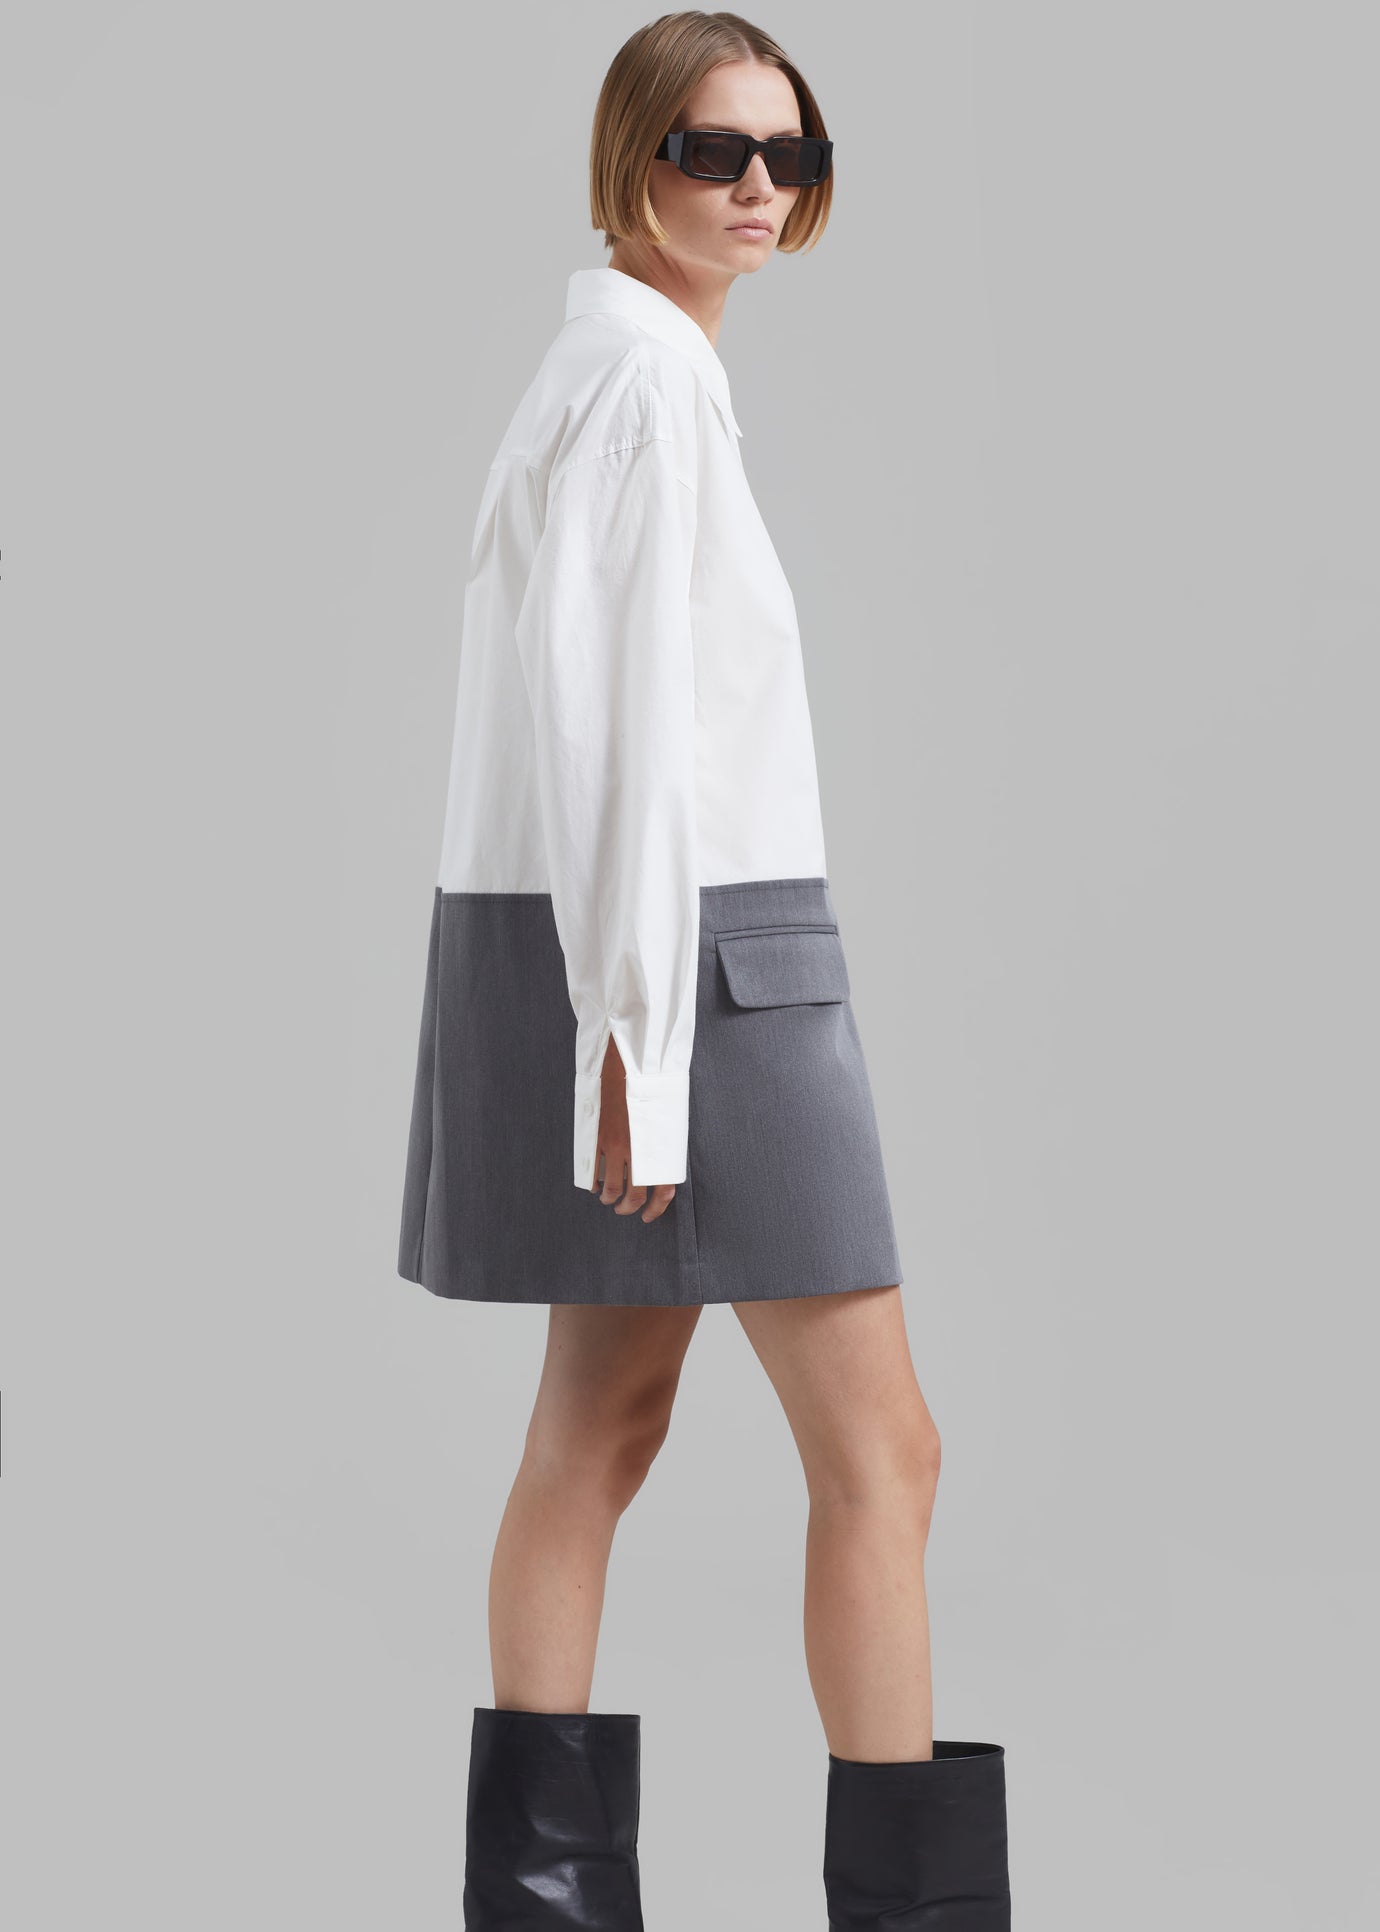 Marissa Shirt Dress - White/Grey - 1